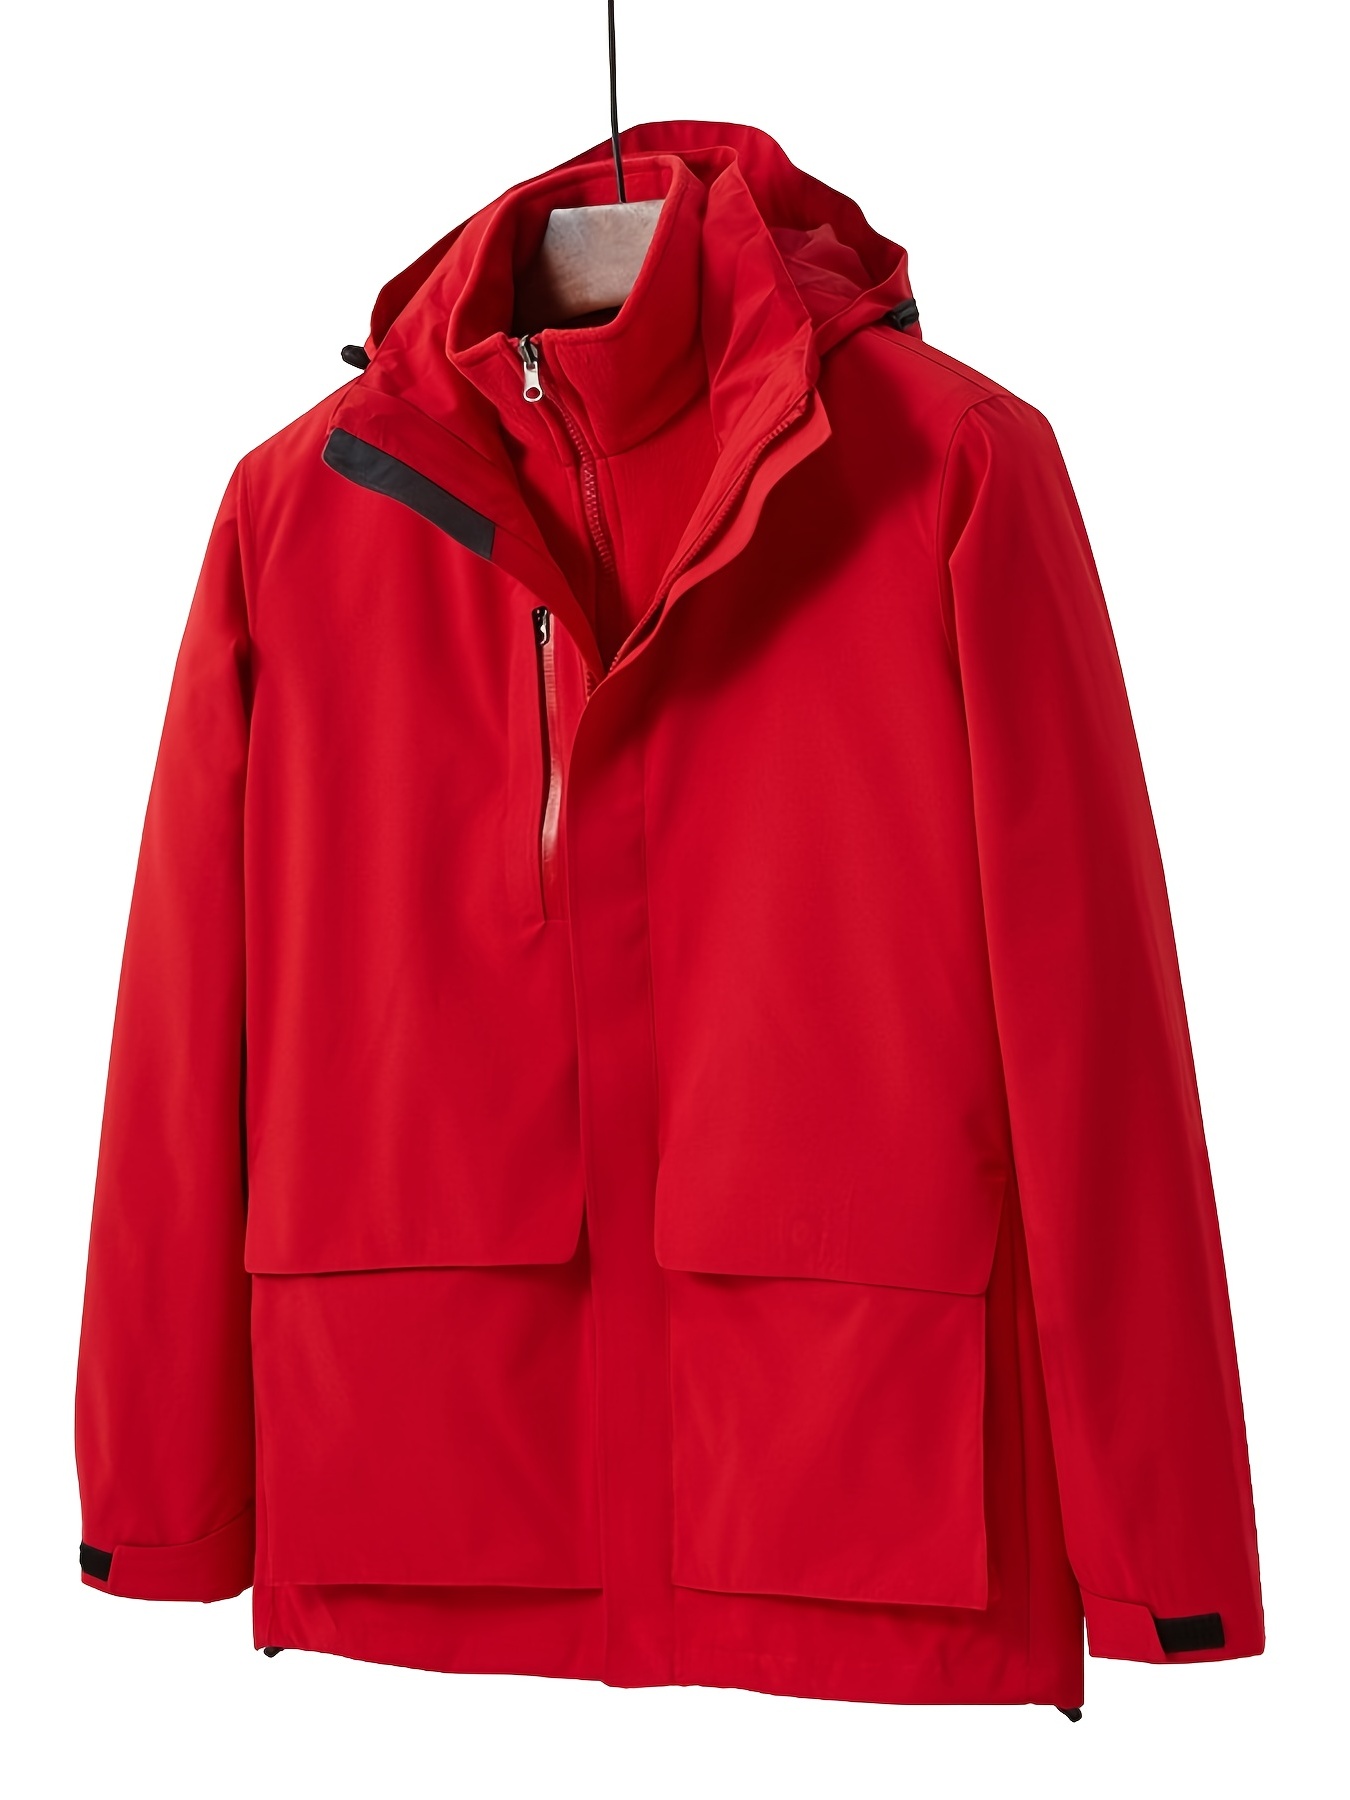 Men's Outdoor Jacket, Waterproof Windproof Rain Coat For Winter Cold  Weather Mountaineering Hiking Cycling Running Fishing